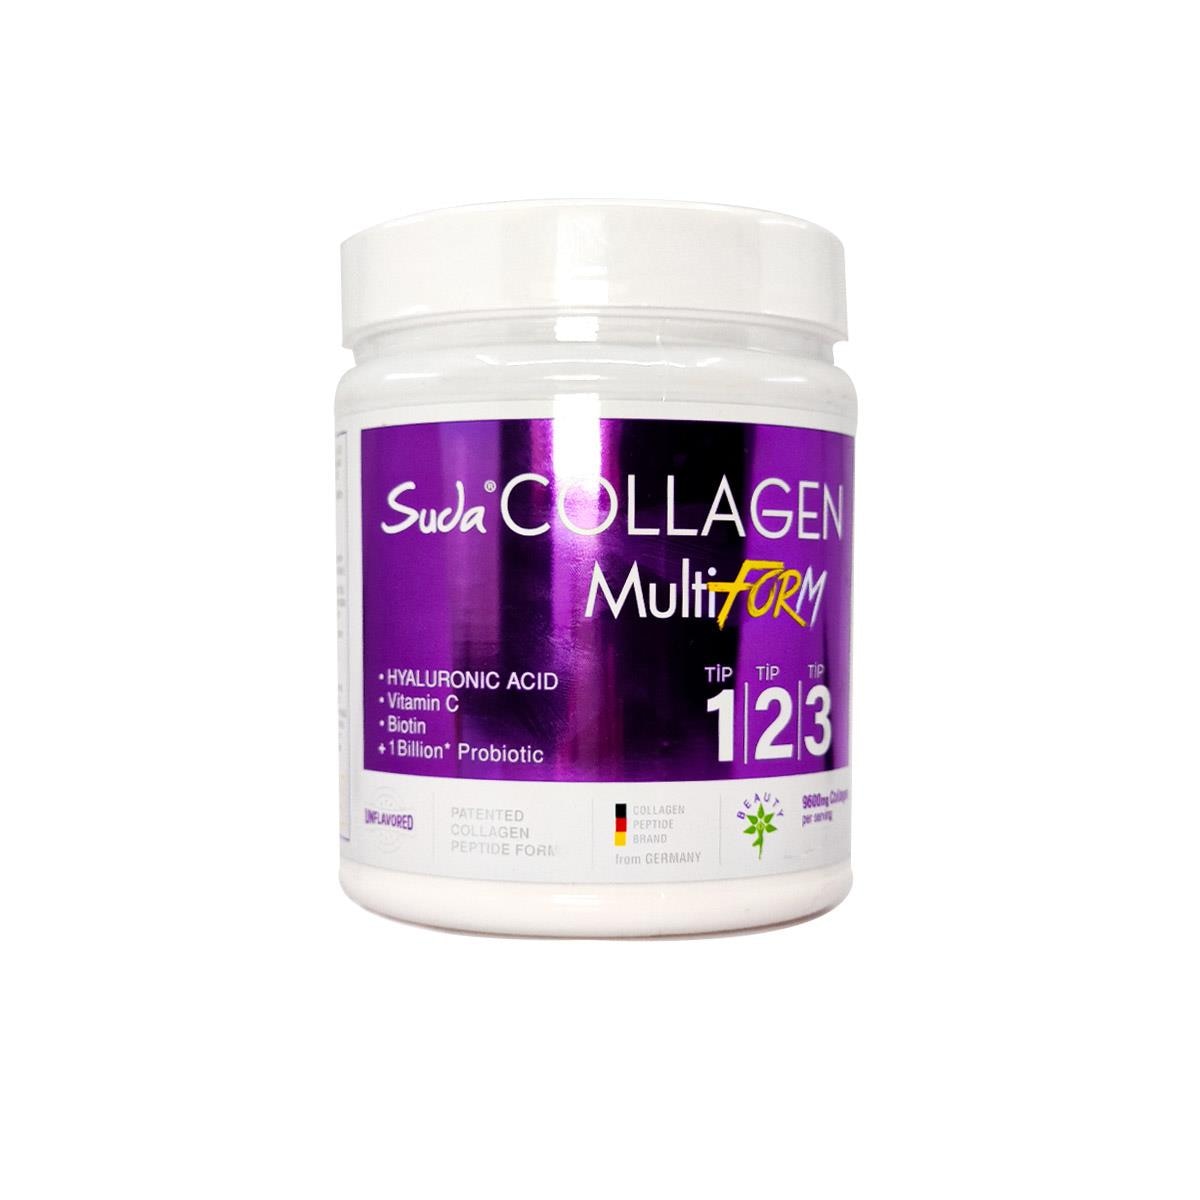 Suda Collagen Multi form. Suda Collagen Multiform порошок. Suda Collagen Multiform 90 Tablets.